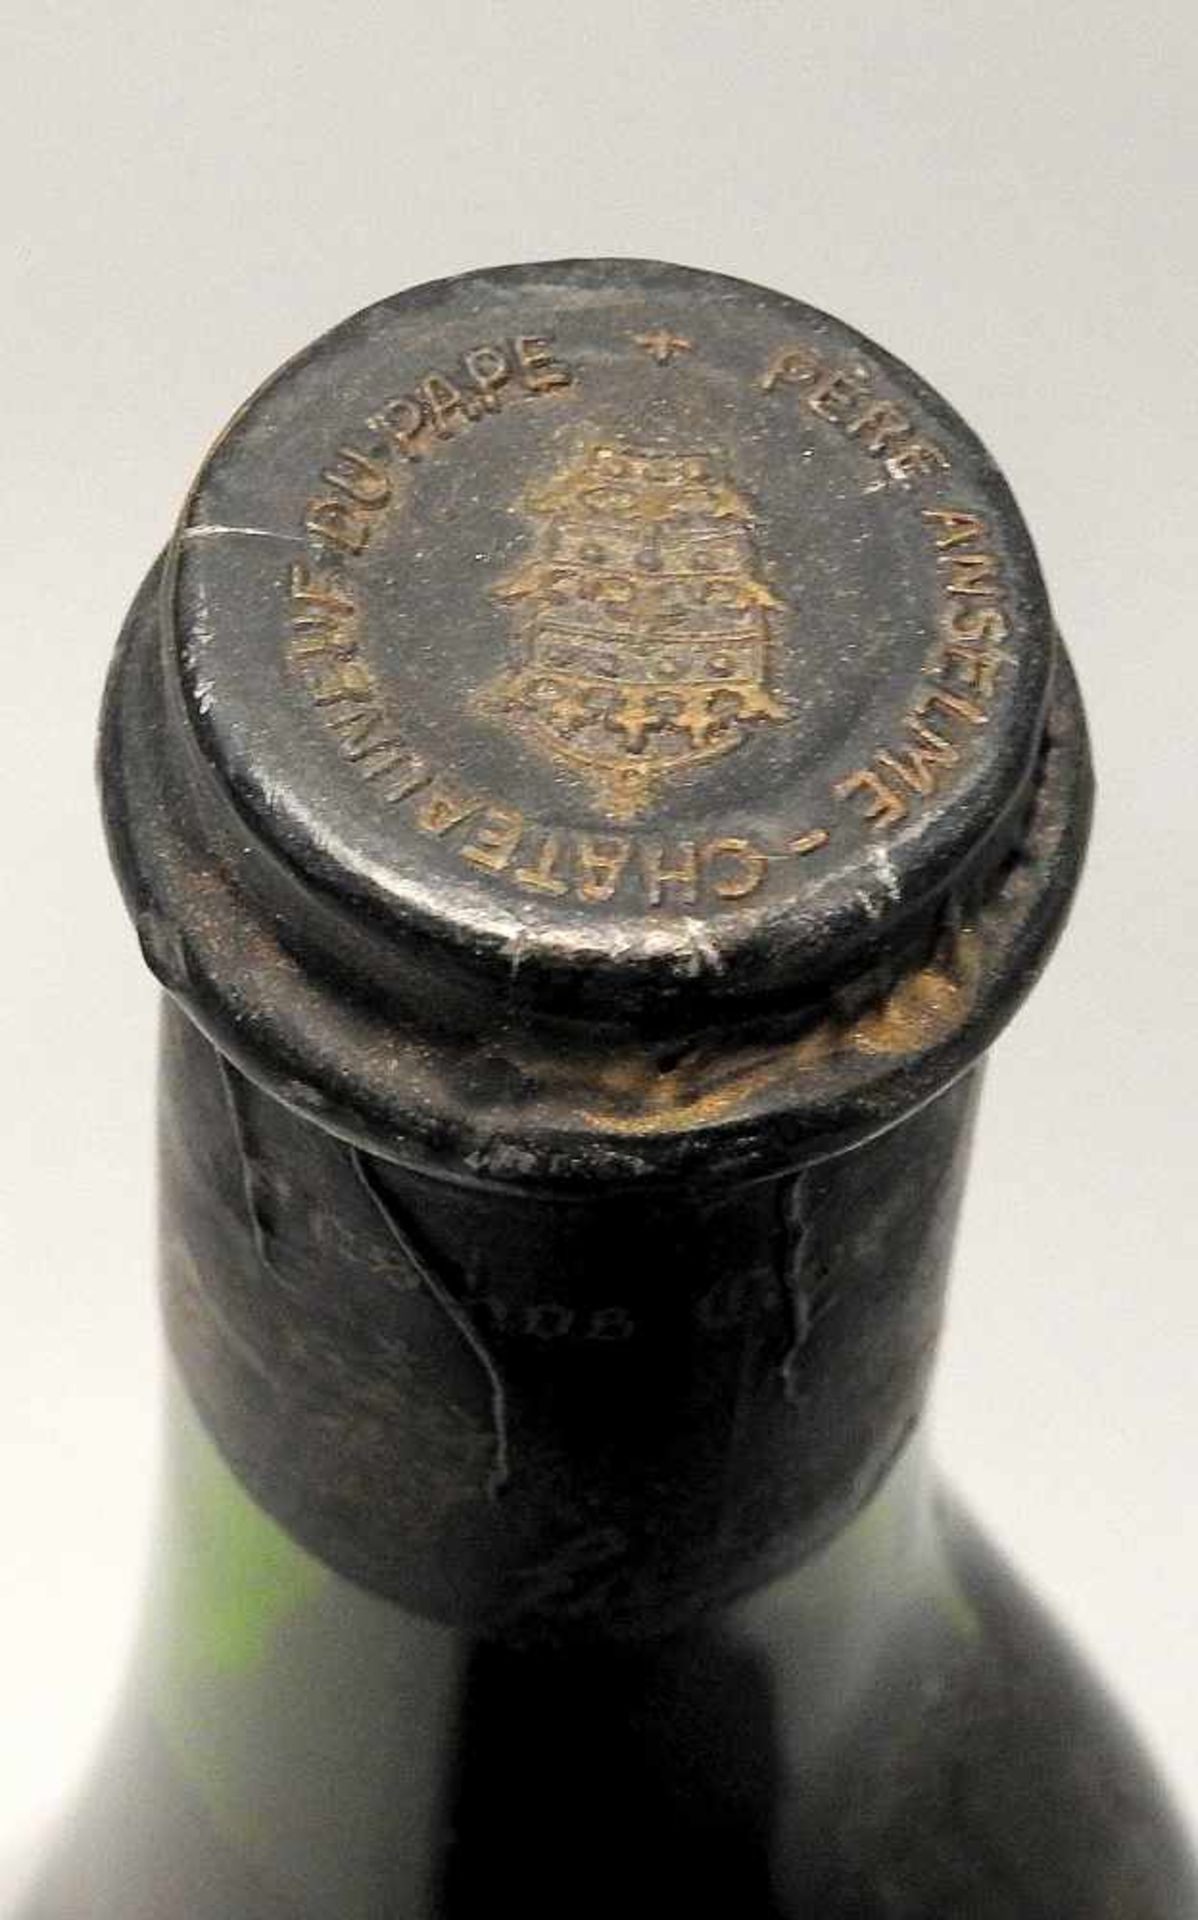 Châteauneuf-du-PapePère Anselme, Brotte La Fiole, Inhalt 750 ml. Etikett teils besch - Image 5 of 6